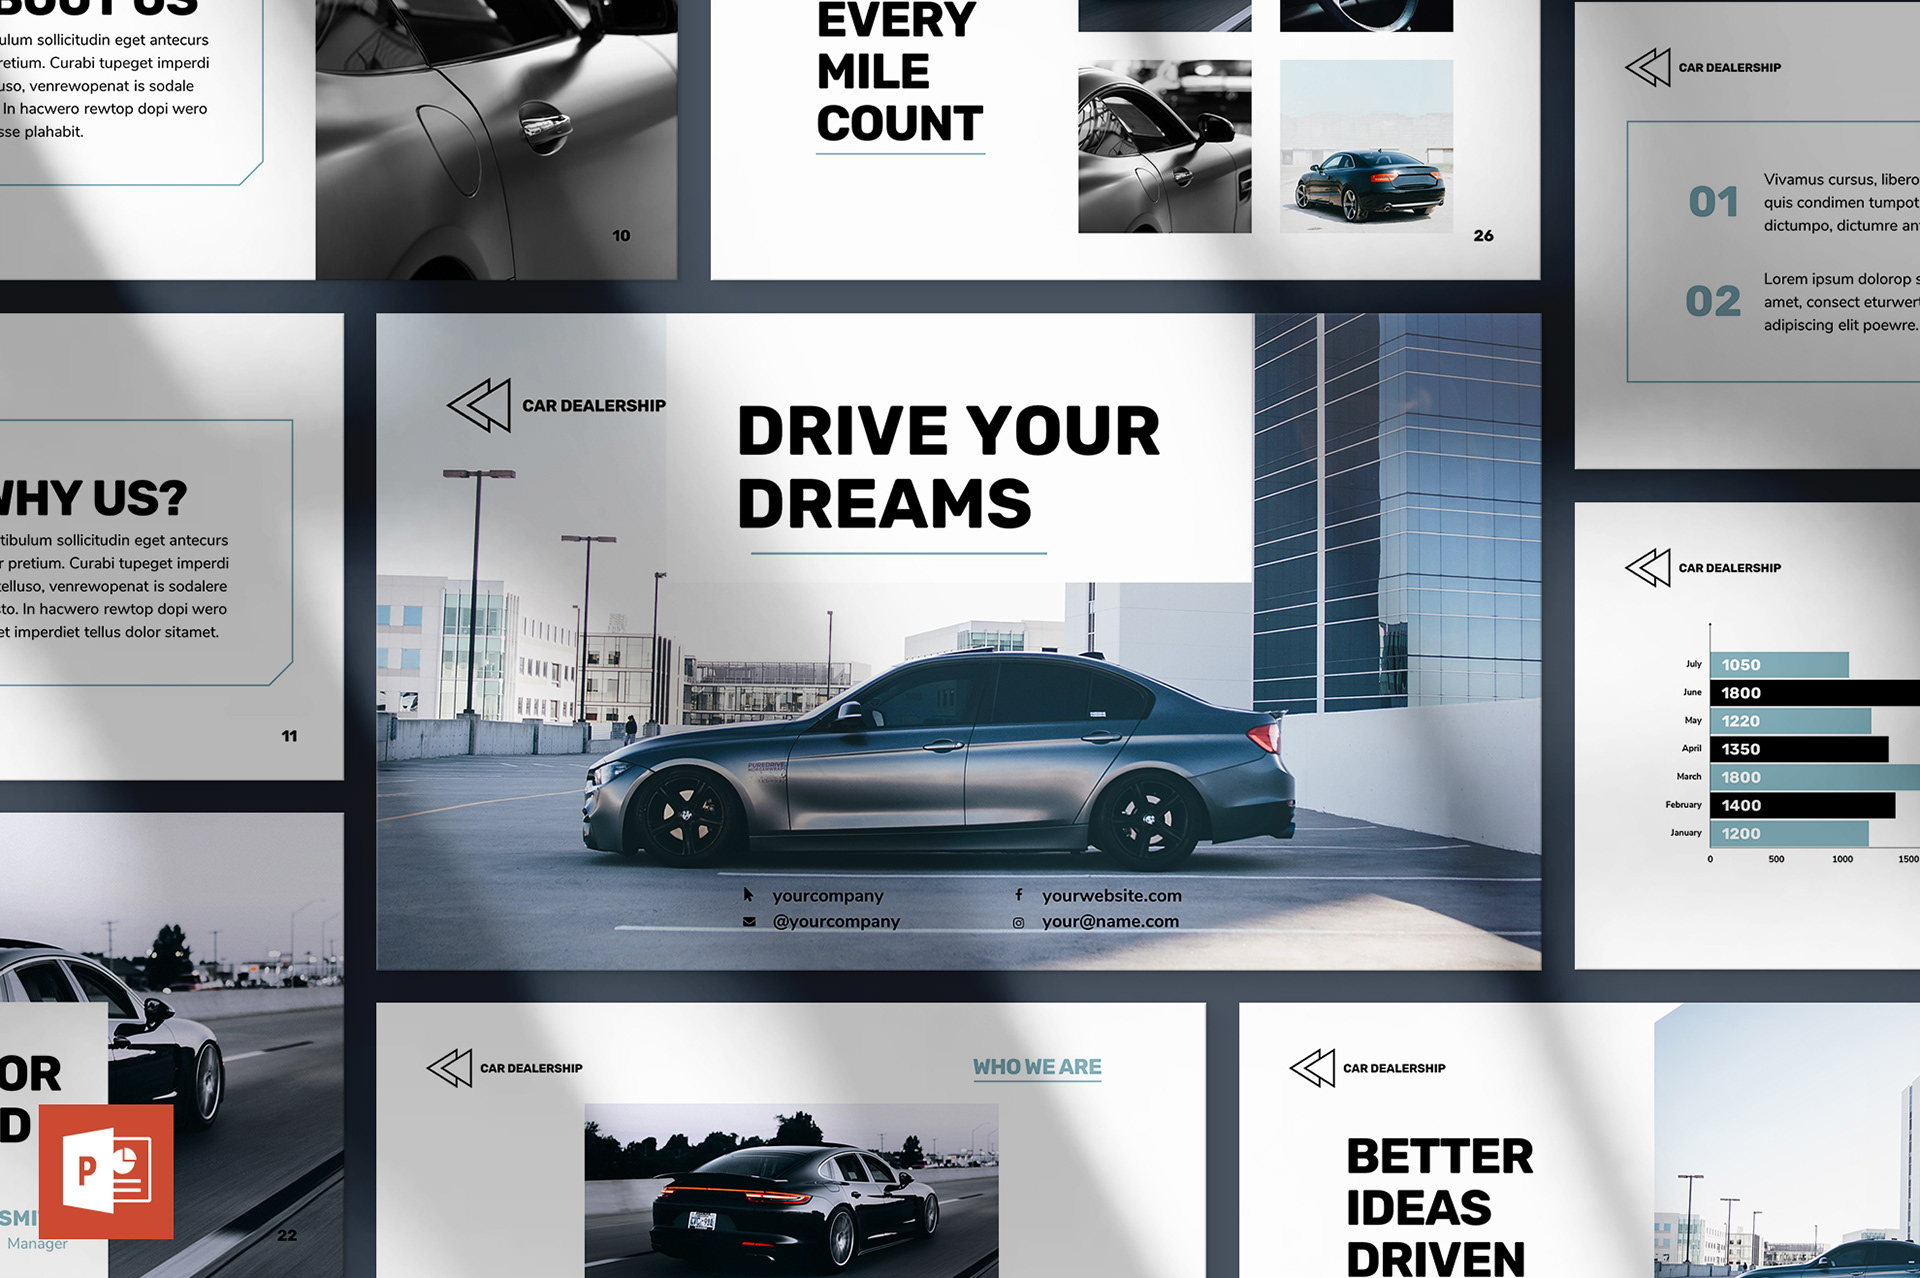 Car Dealership PowerPoint Presentation Template on Behance